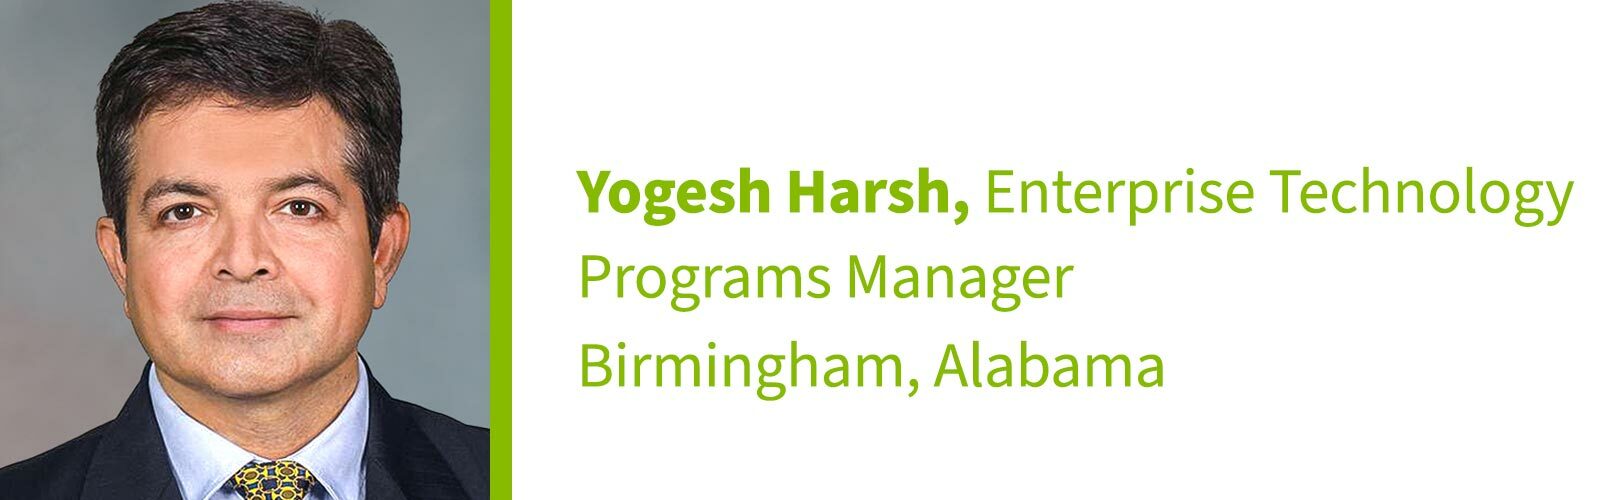 Yogesh Harsh, Enterprise Technology Programs Manager, Birmingham, Alabama 